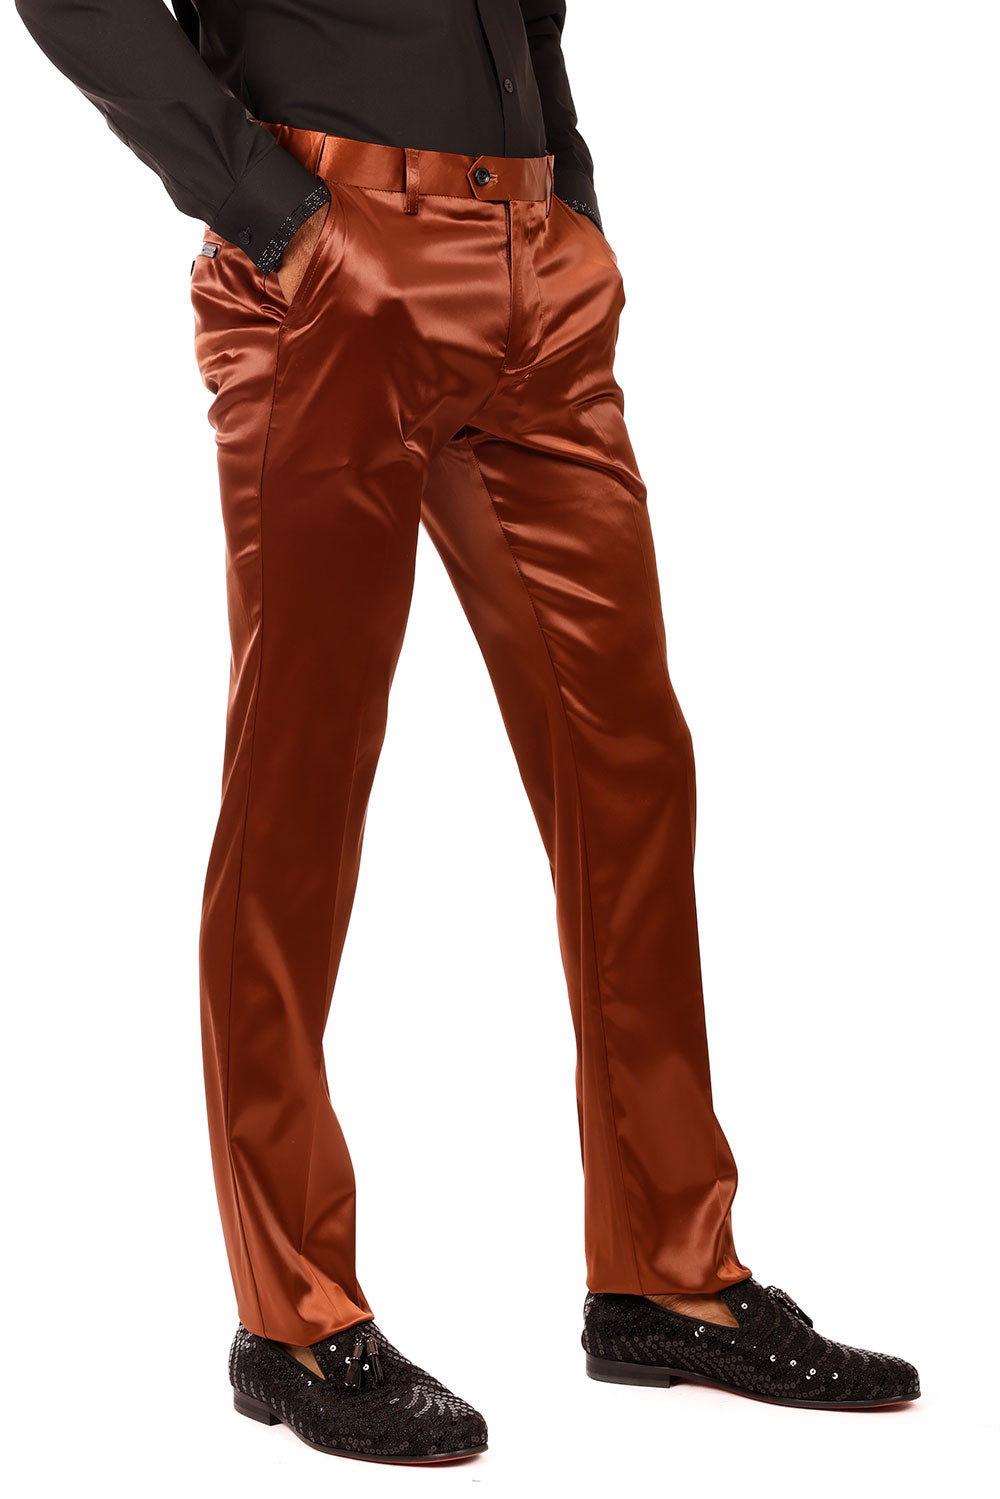 BARABAS Men's Solid Color Shiny Chino Pants VP1010 Nutshell